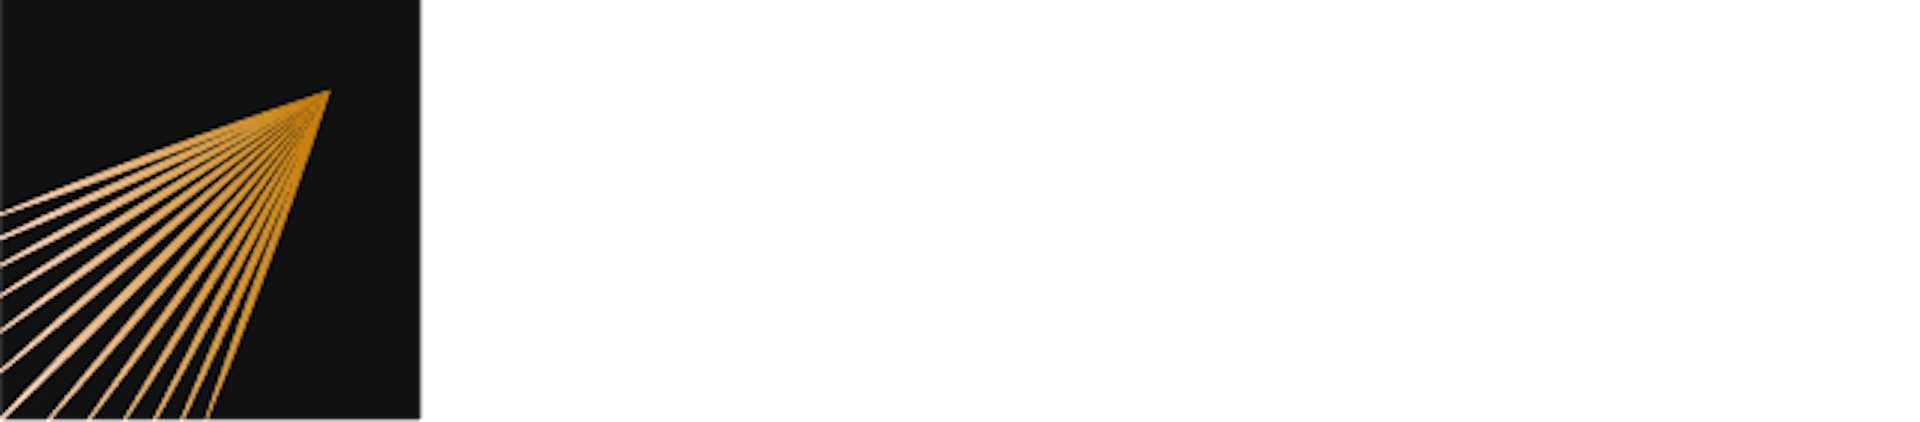 London Institute for Healthcare Engineering logo